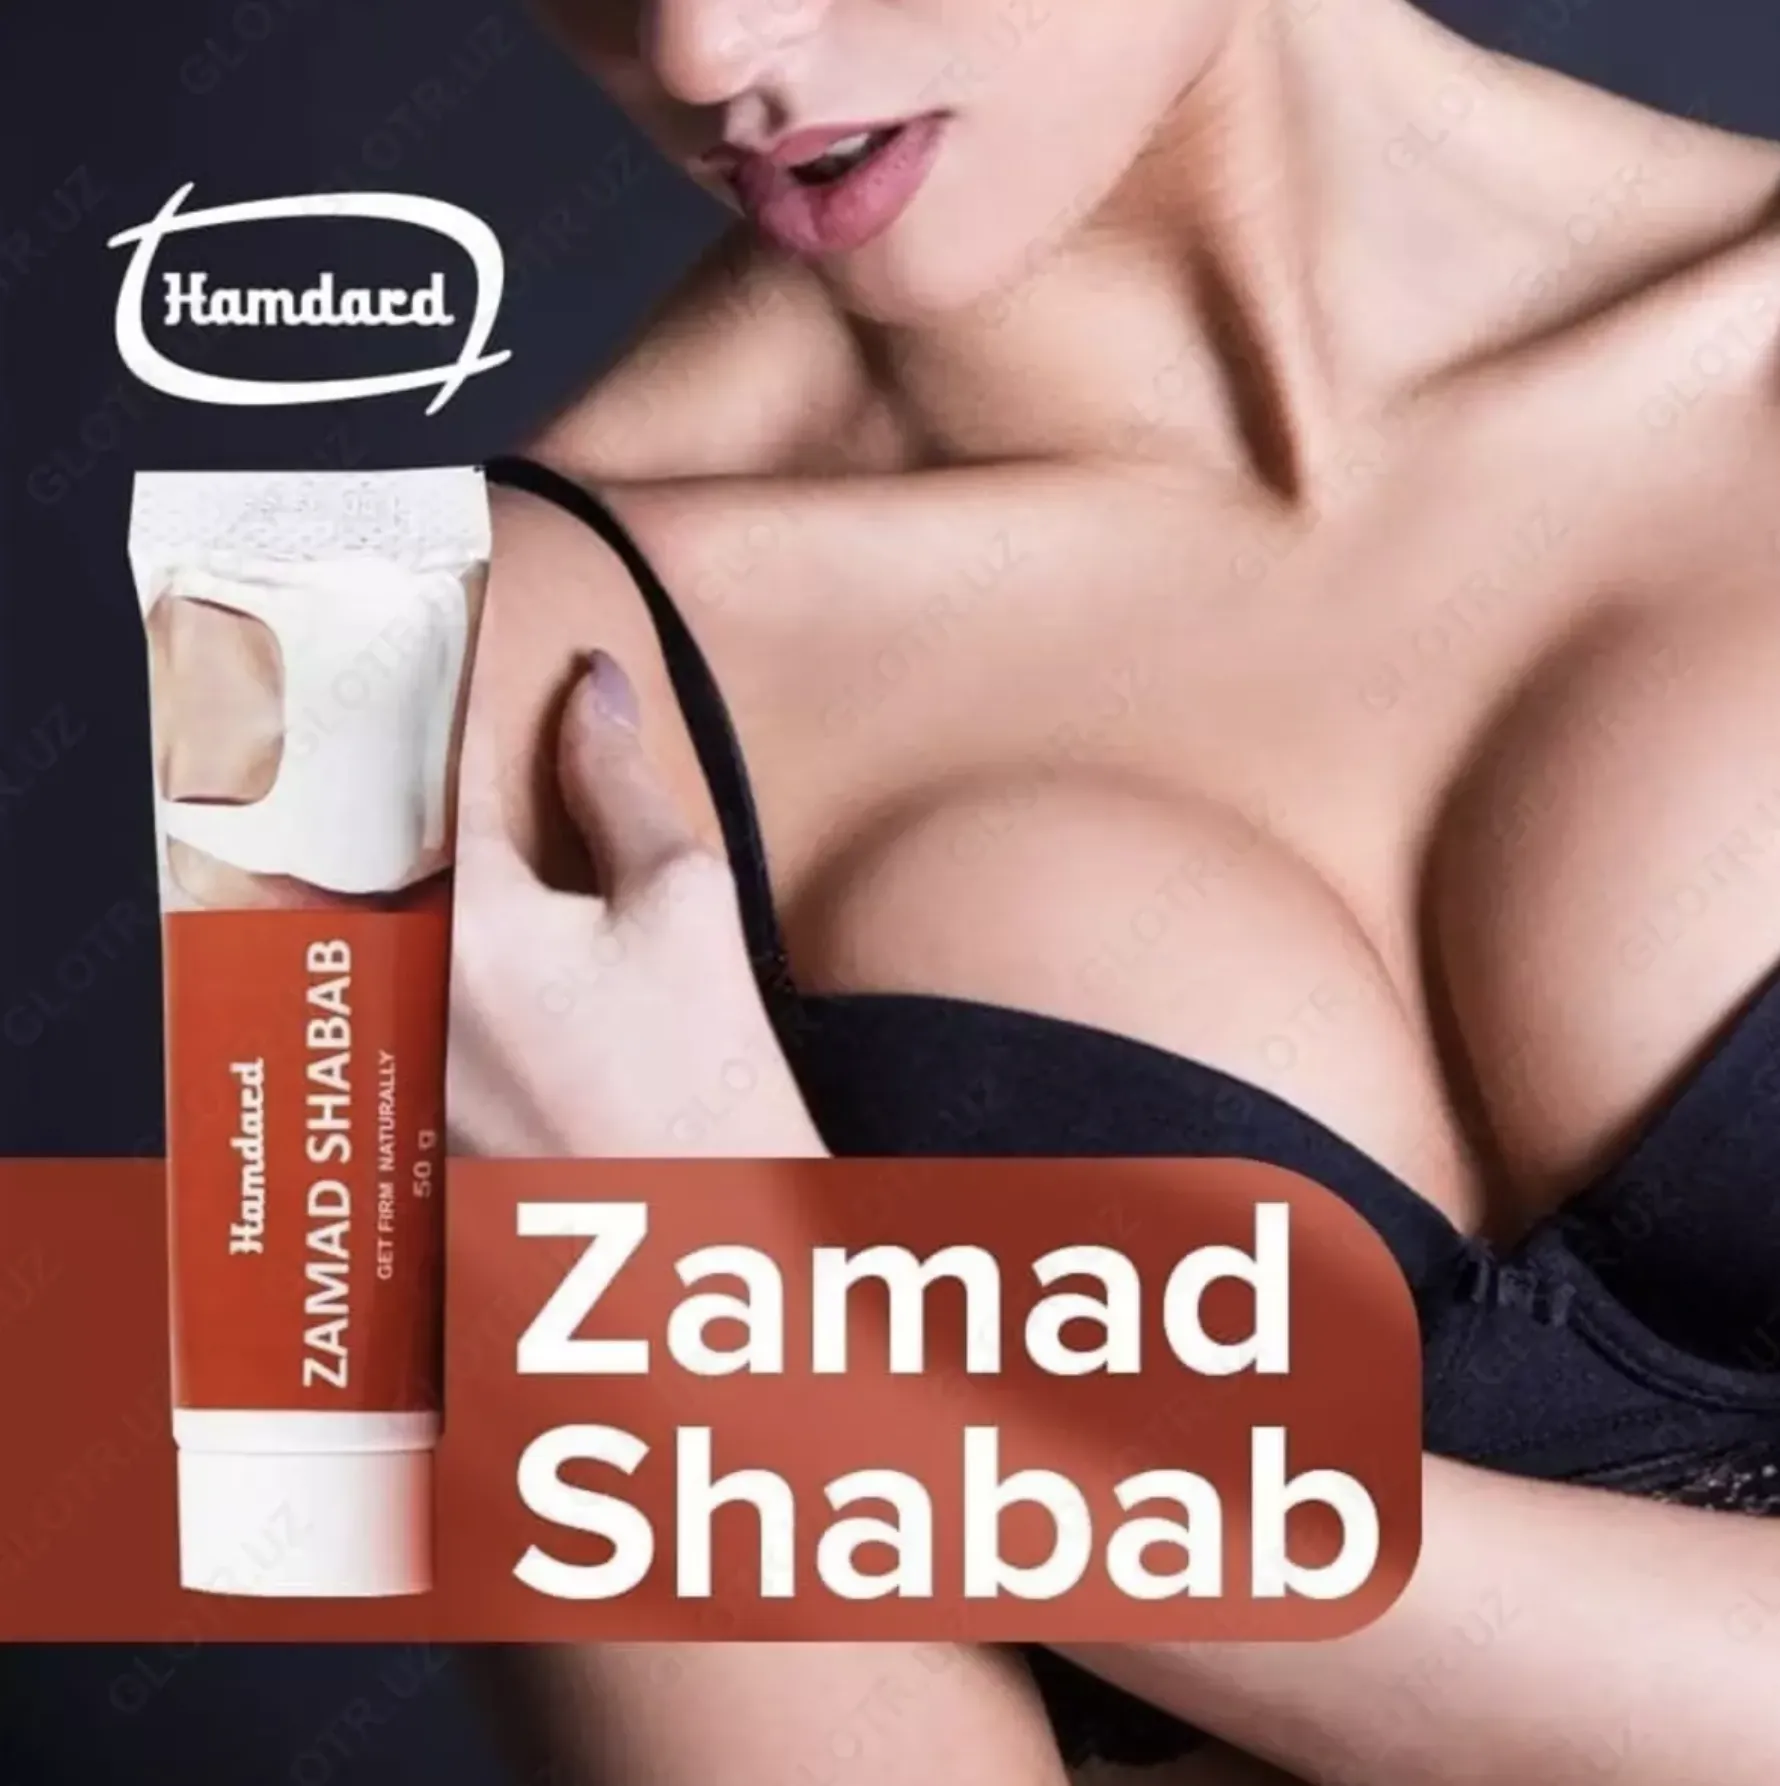 Крем для упругости груди "Zamad Shabab", 50 г, Hamdard#2